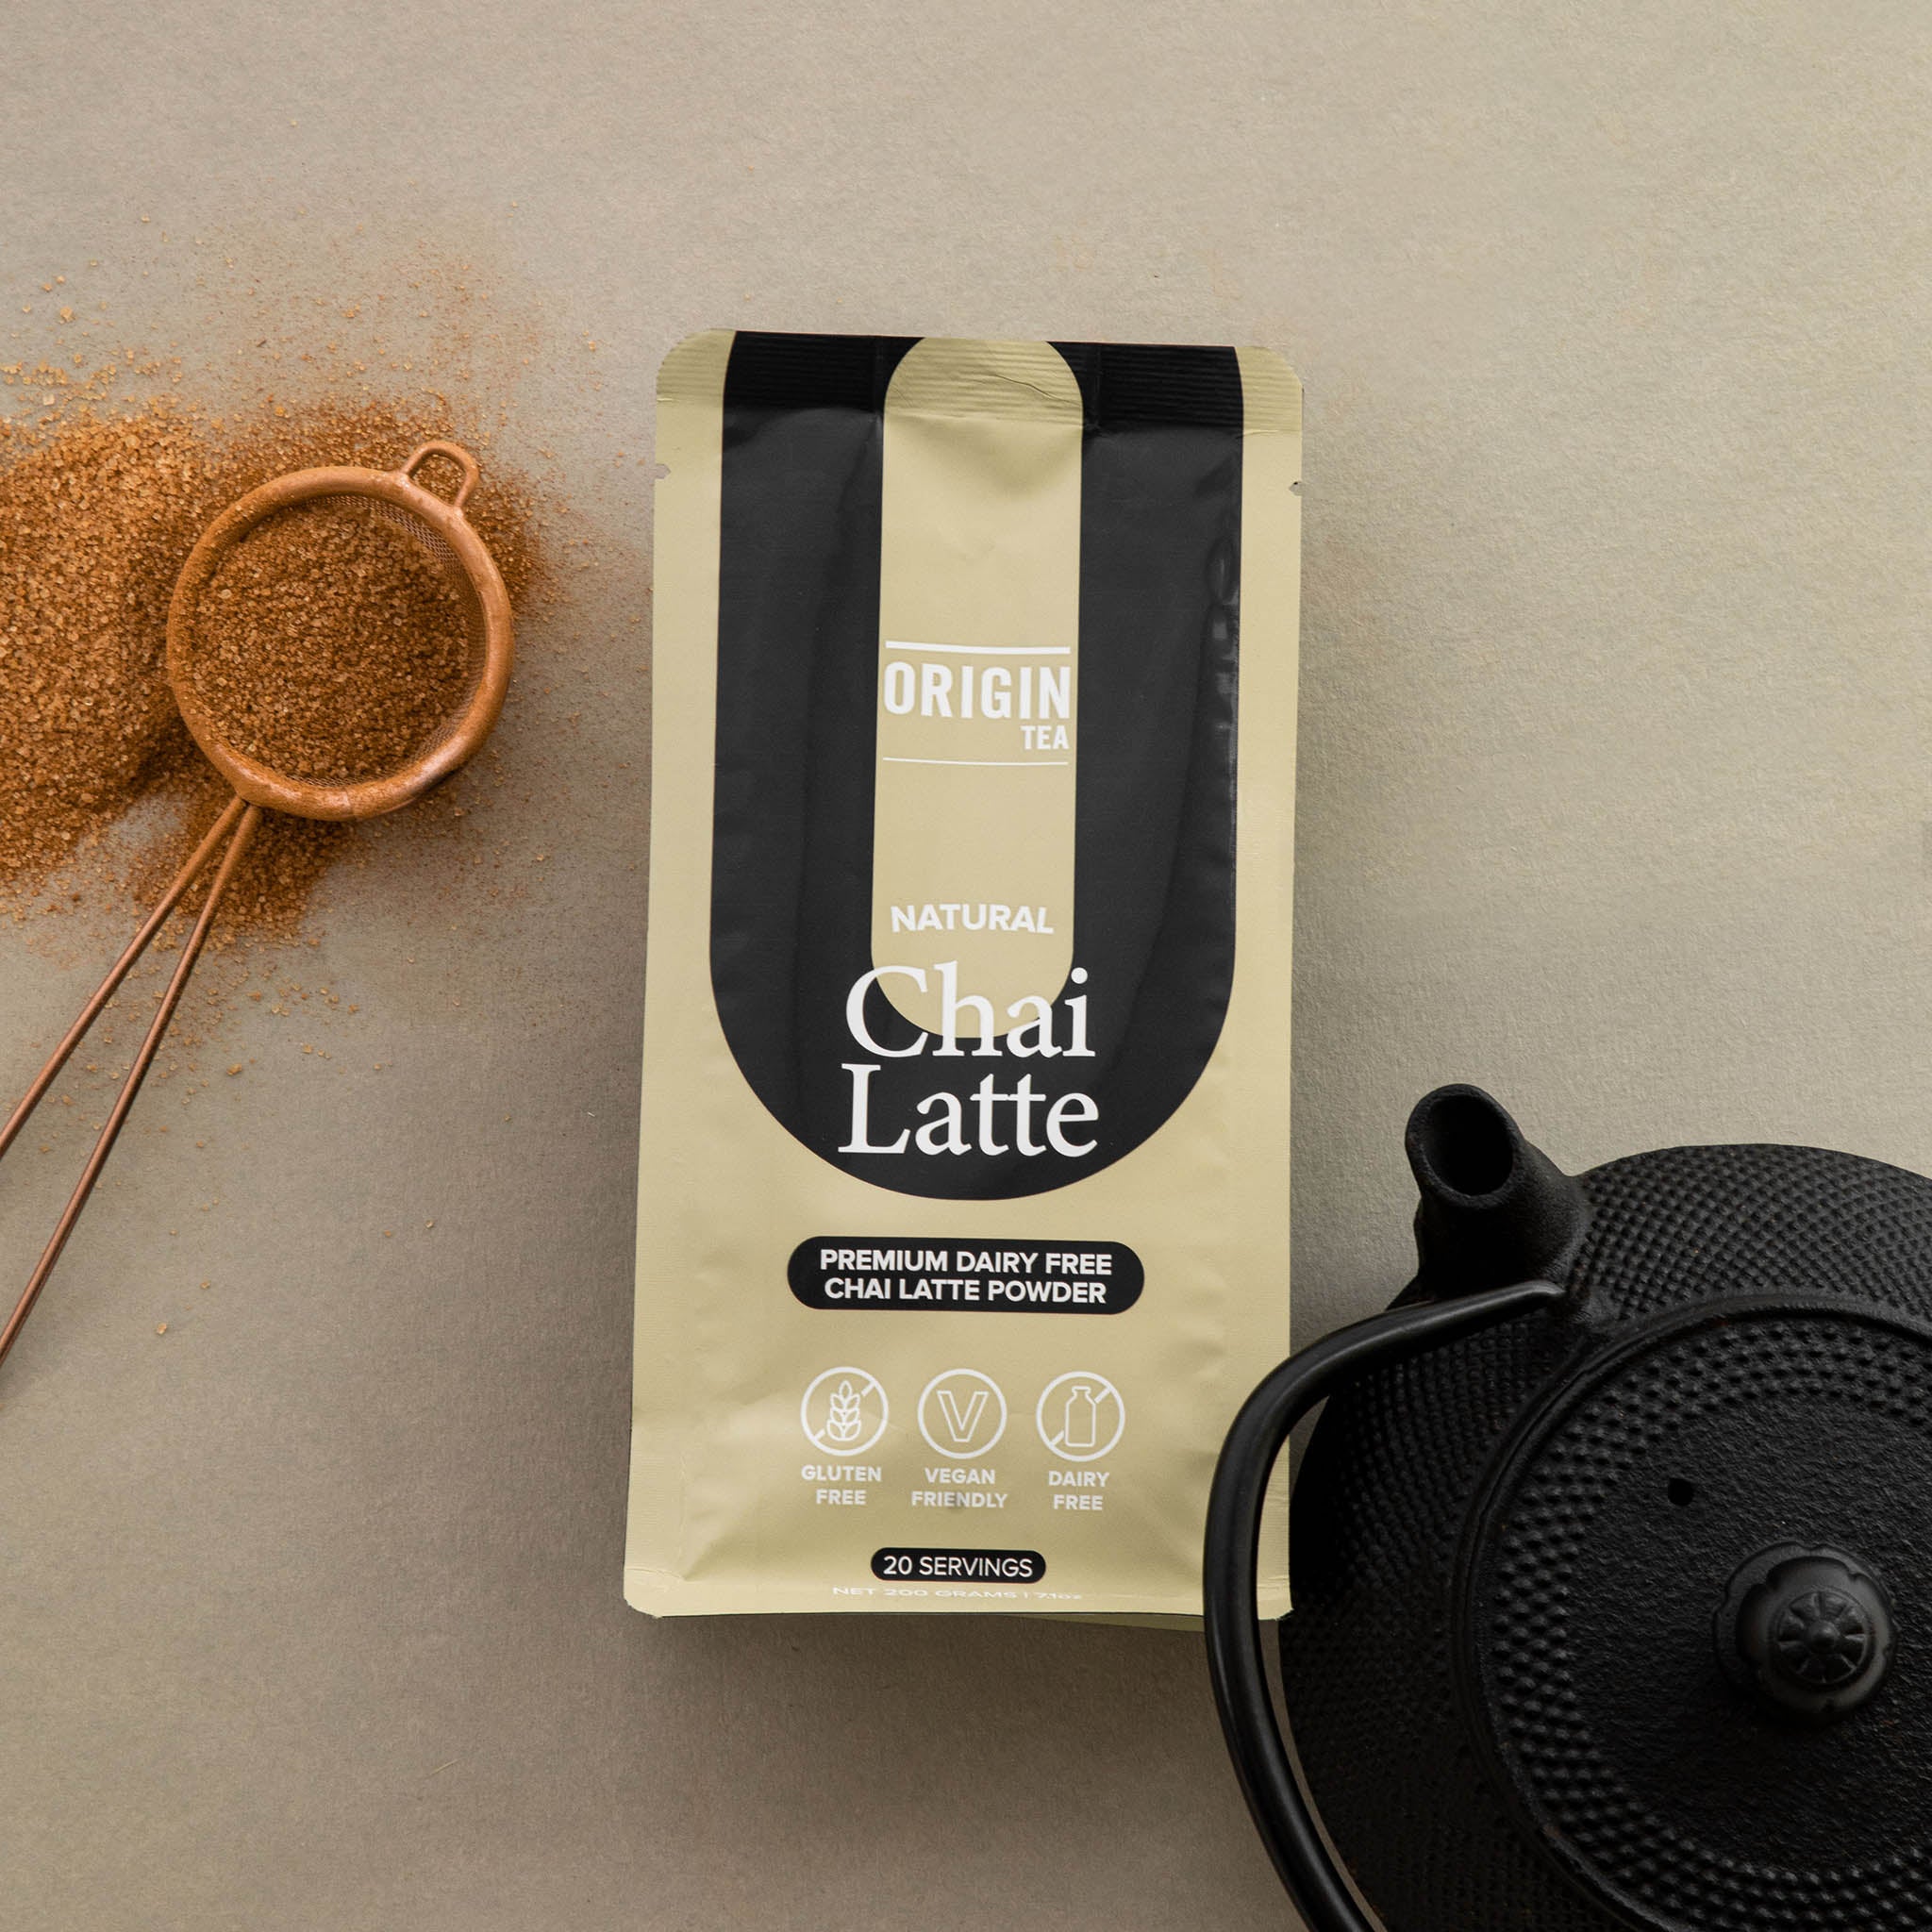 Caffeine Free Natural Chai Latte - 200g - Origin Tea